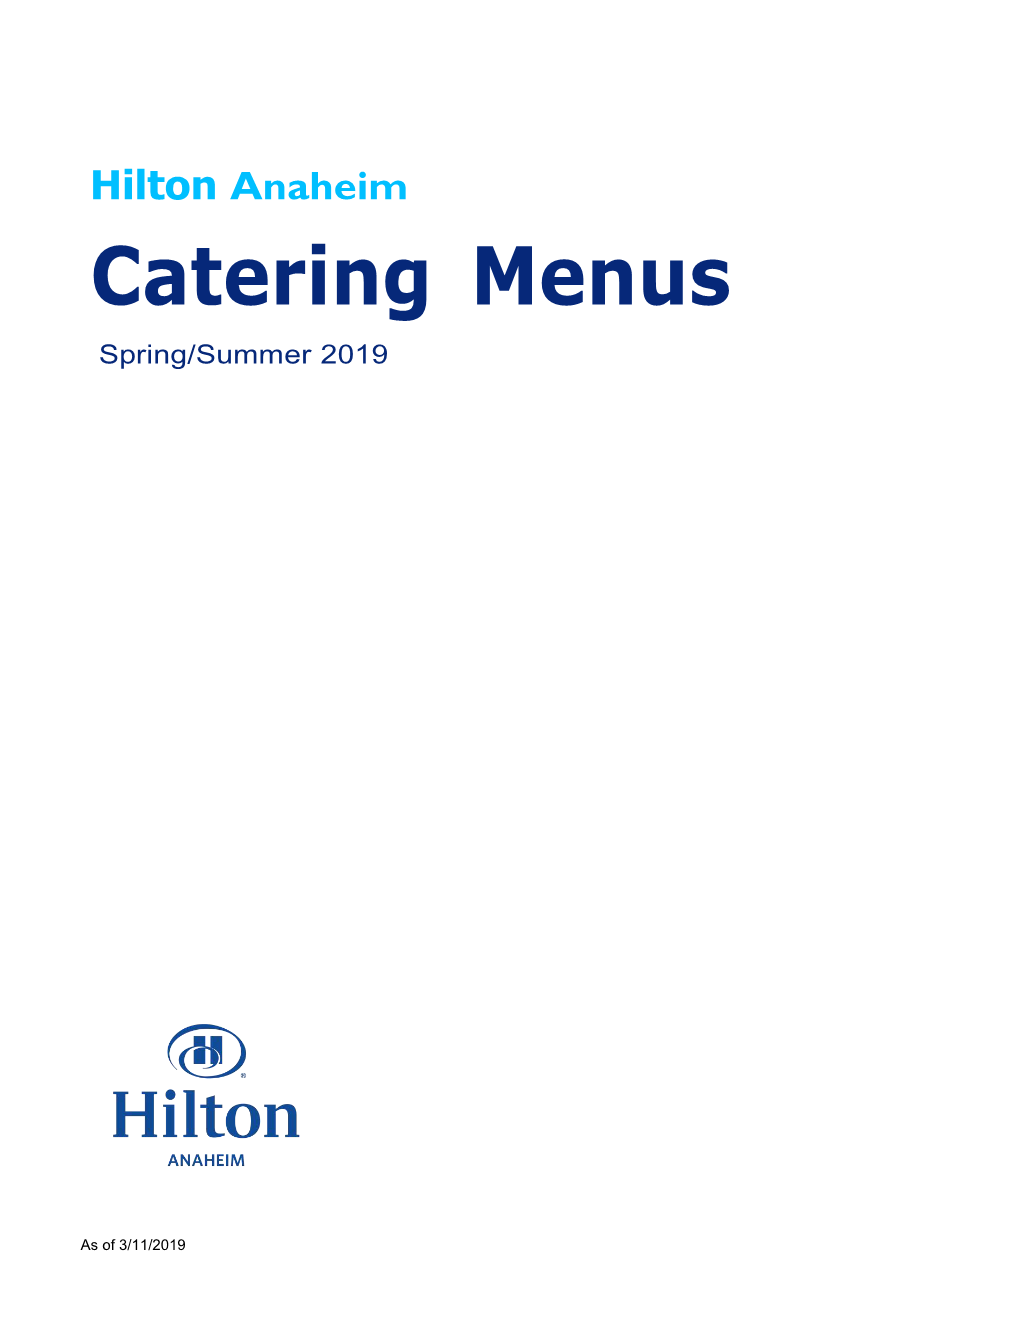 Hilton Anaheim Catering Menus Spring/Summer 2019